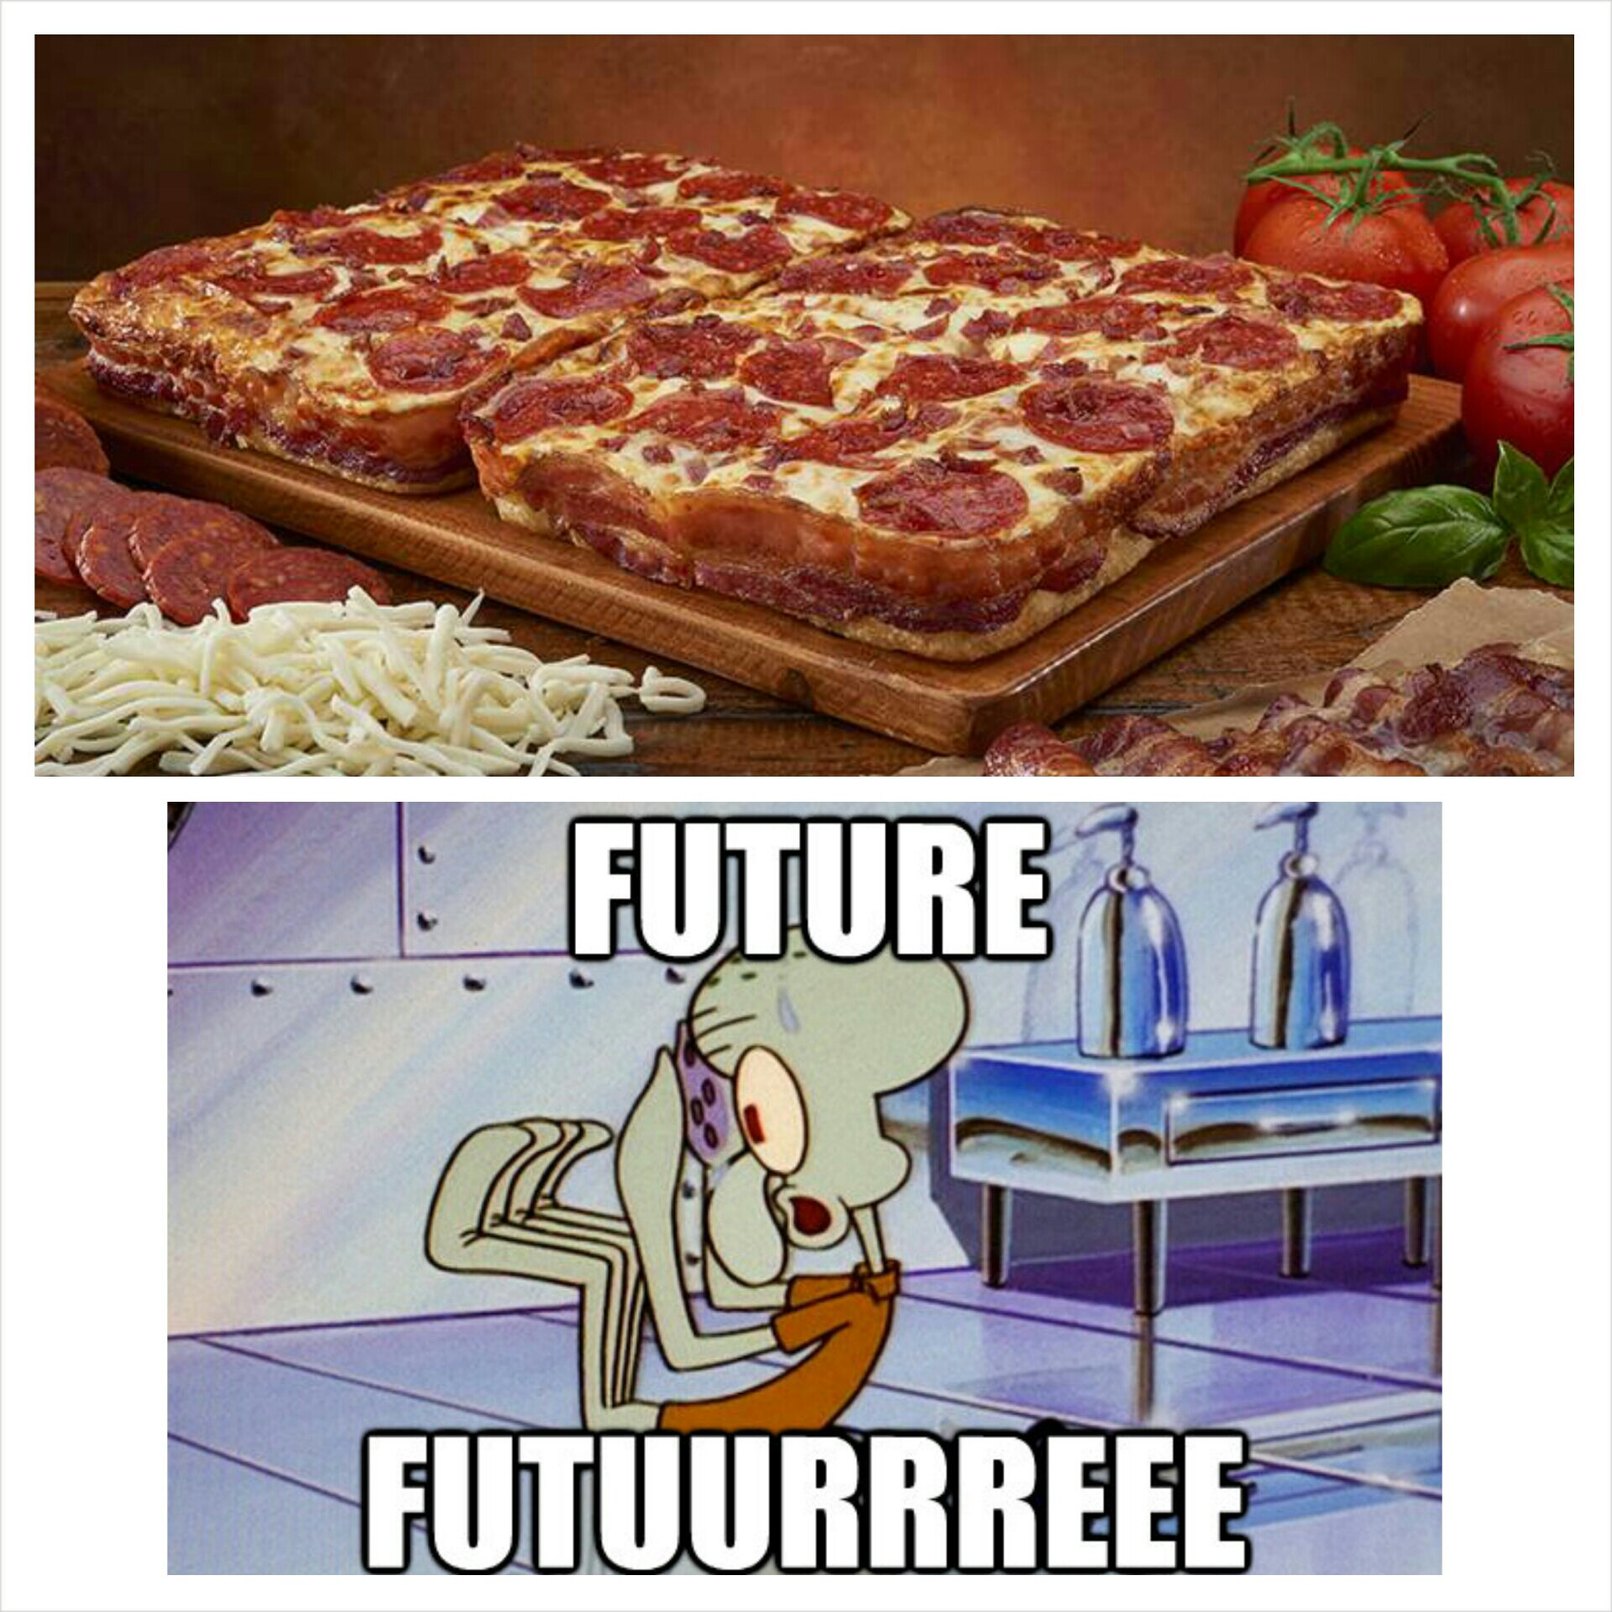 Bacon wrapped pizza - meme